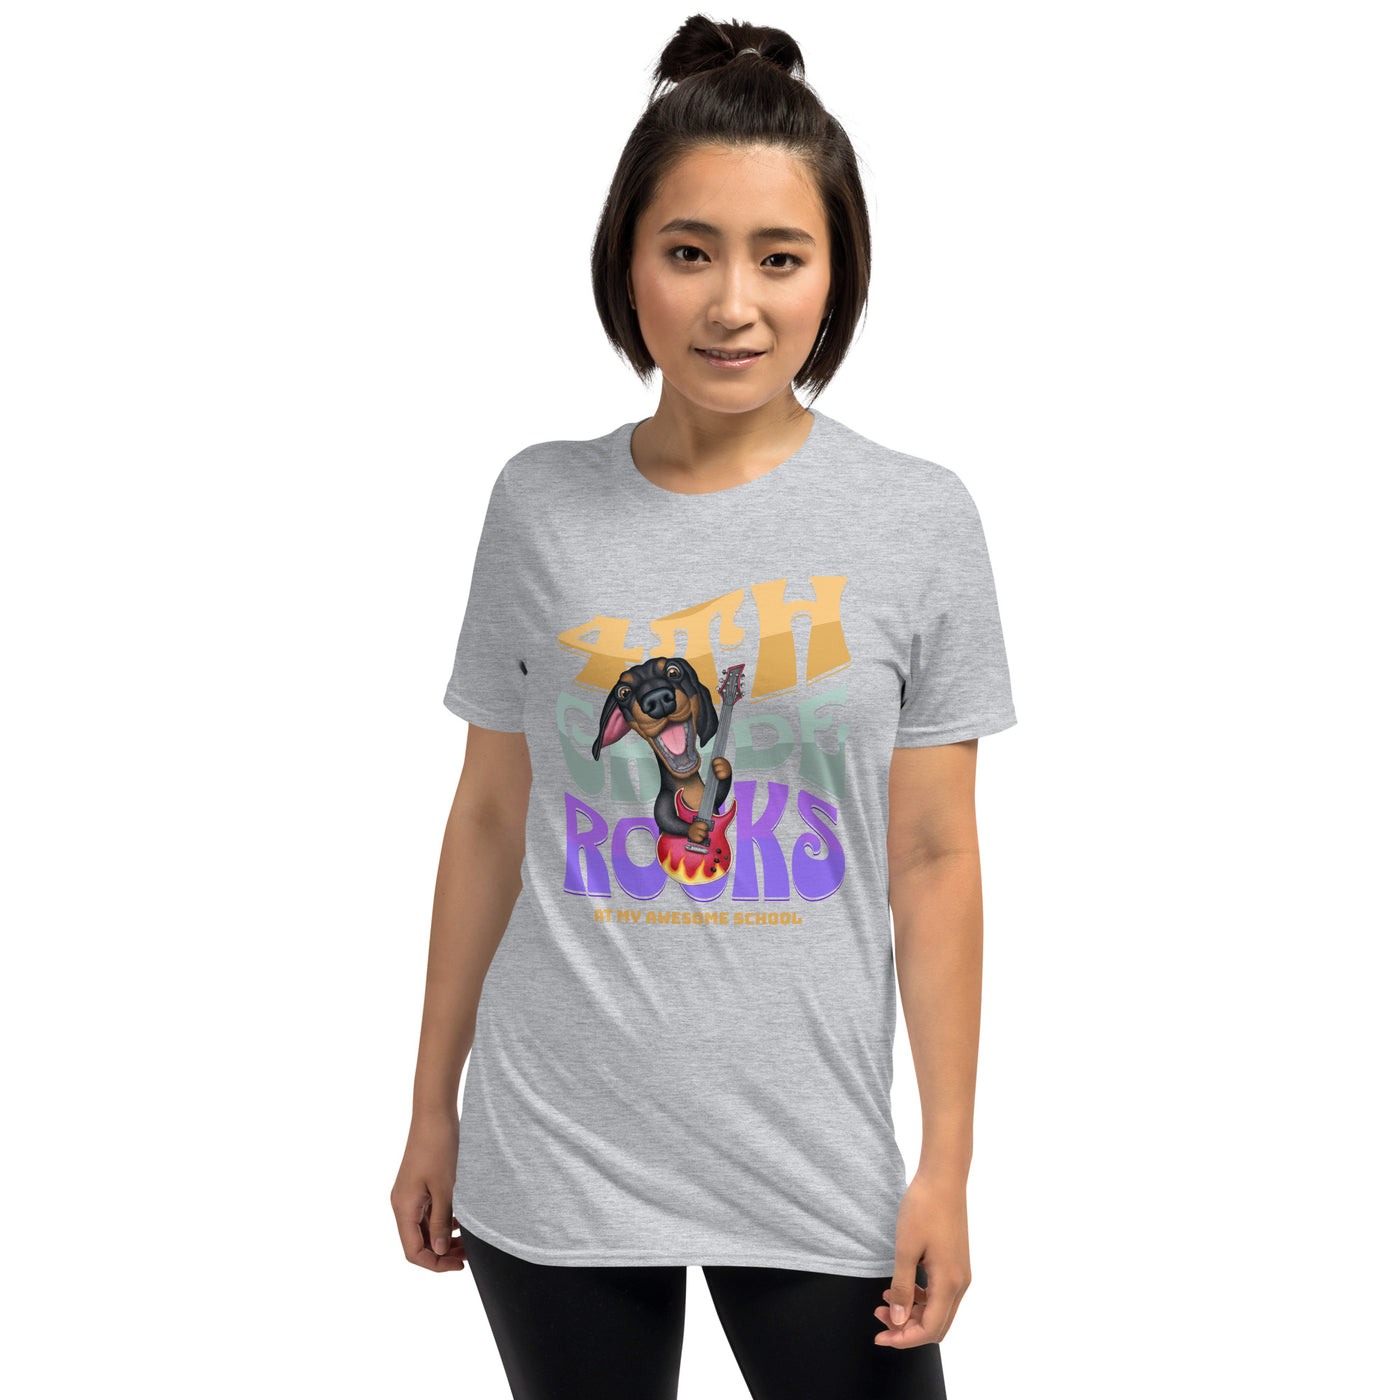 Cute 4th grade teacher tee with doxie dog on 4th Grade Rocks Unisex T-Shirt